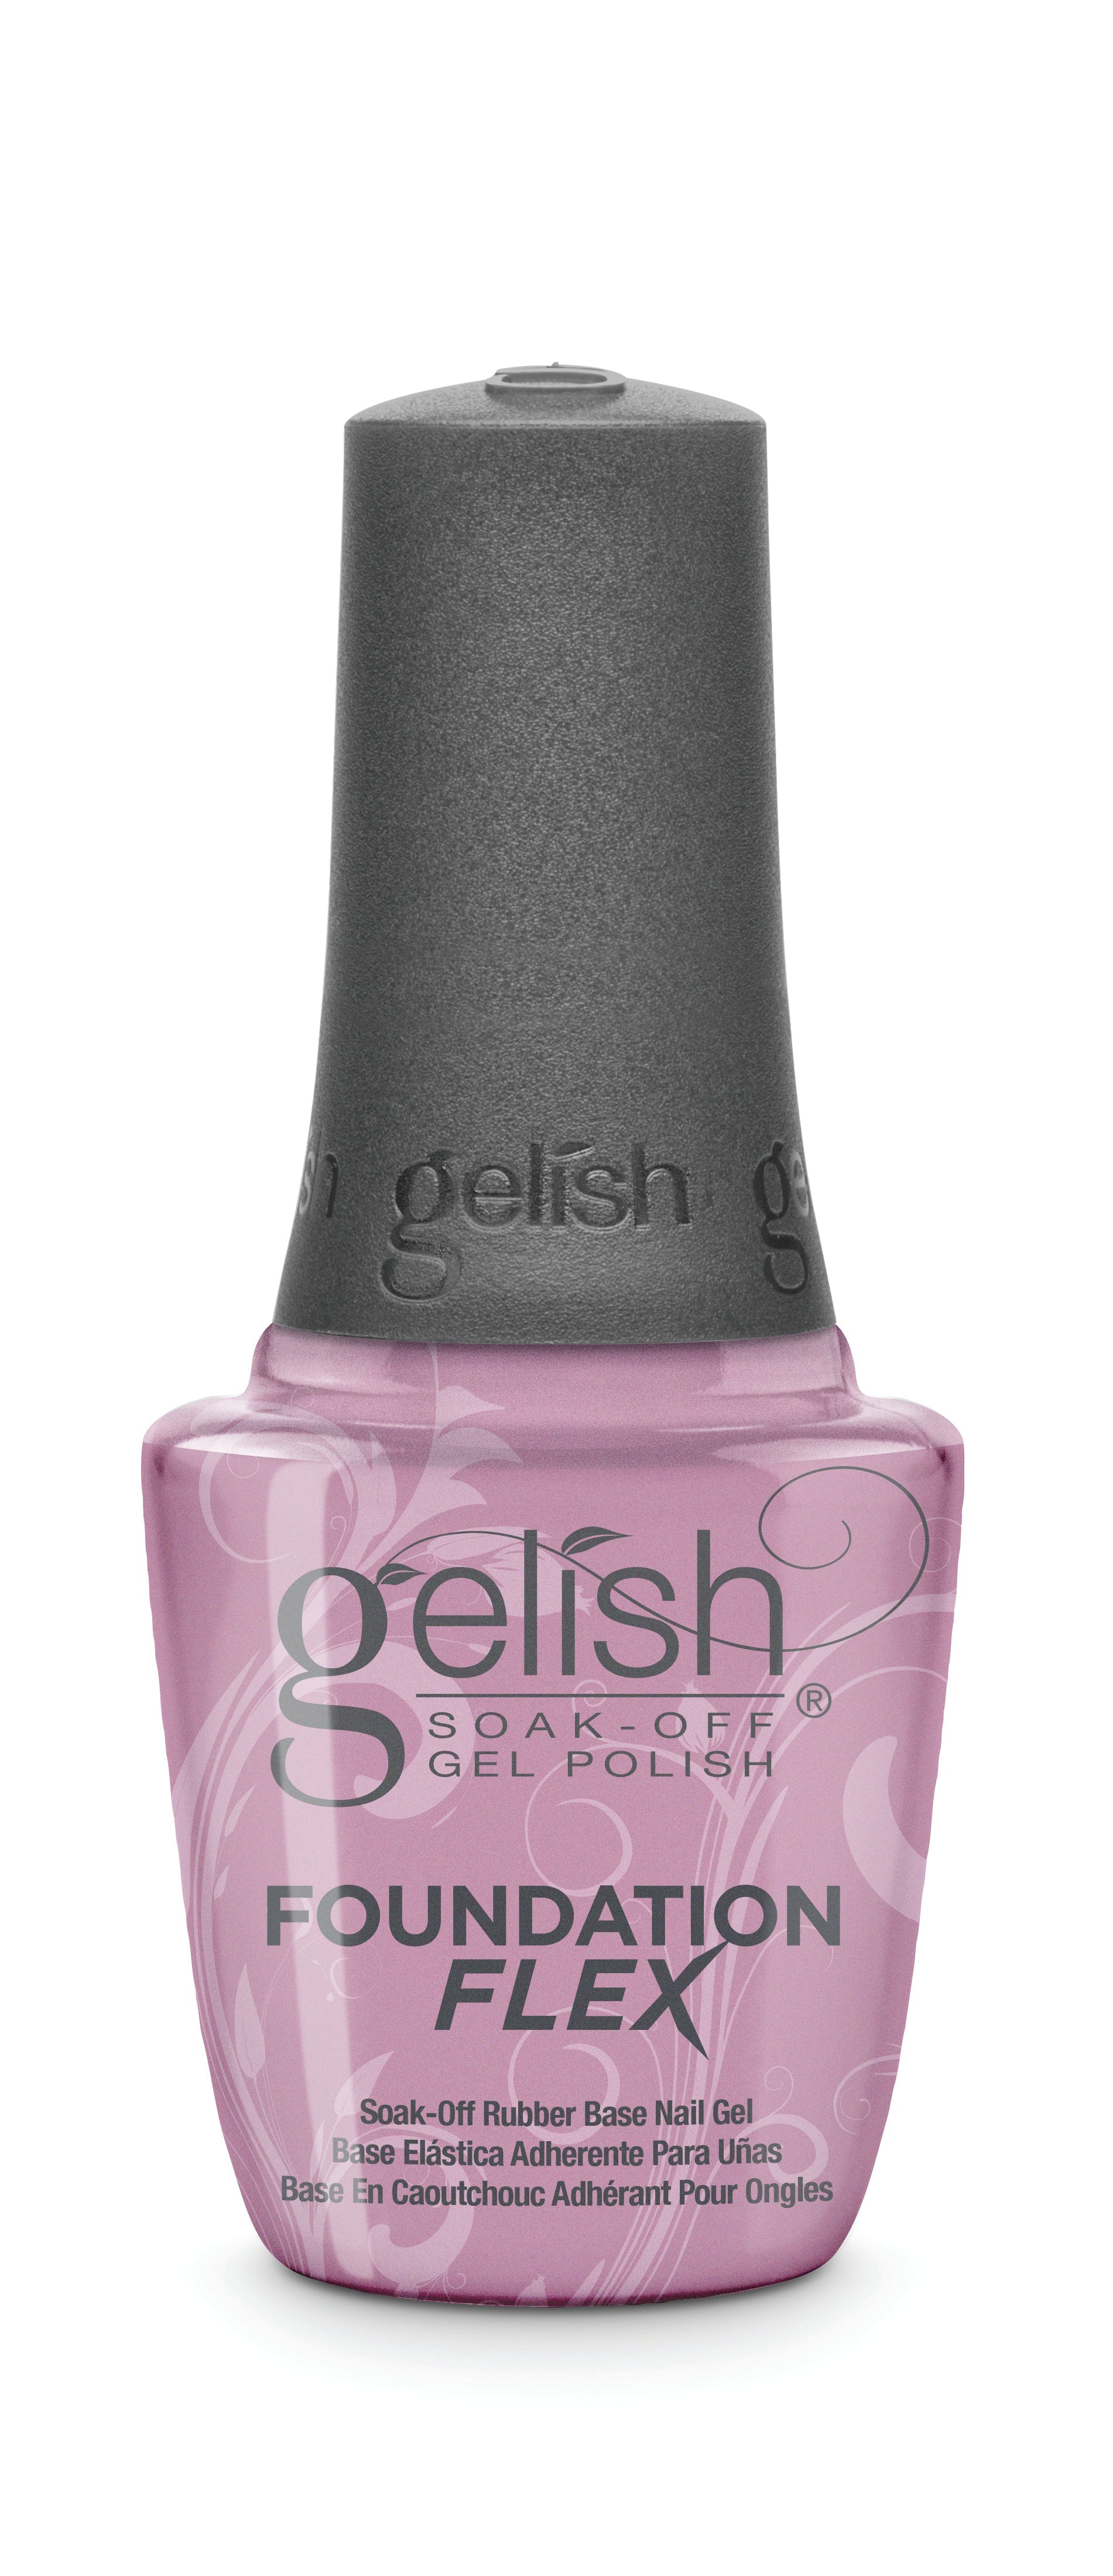 Gelish Foundation Flex - Light Pink